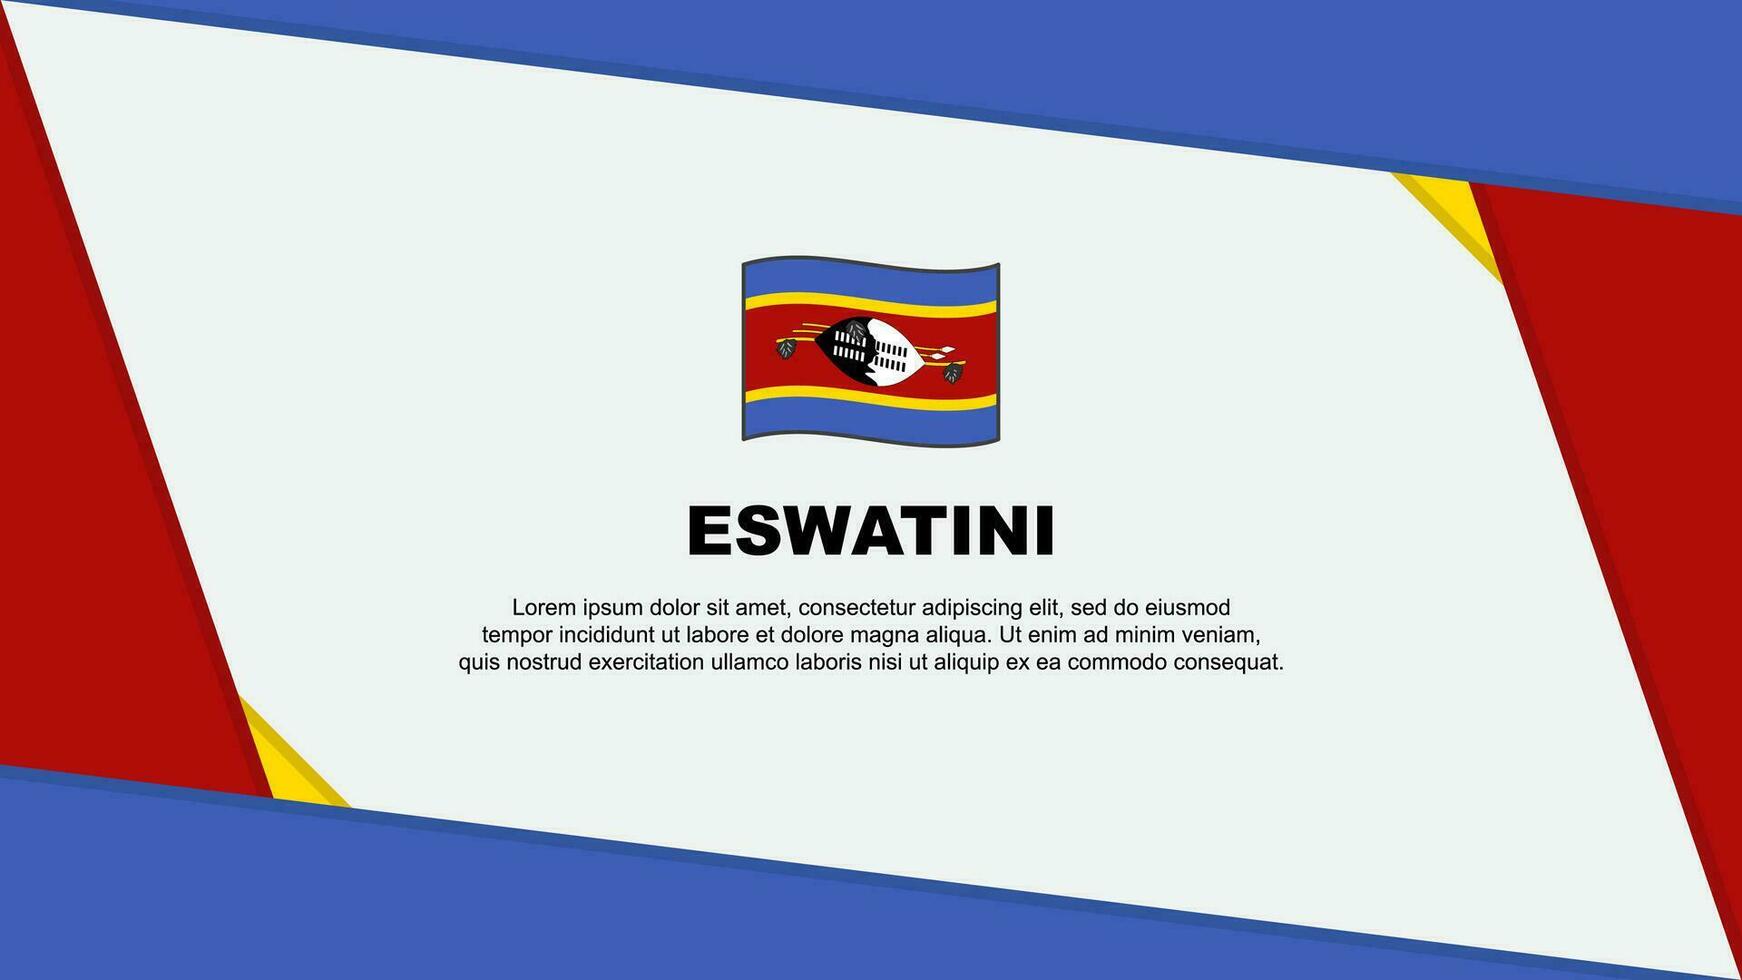 Eswatini bandeira abstrato fundo Projeto modelo. Eswatini independência dia bandeira desenho animado vetor ilustração. Eswatini independência dia